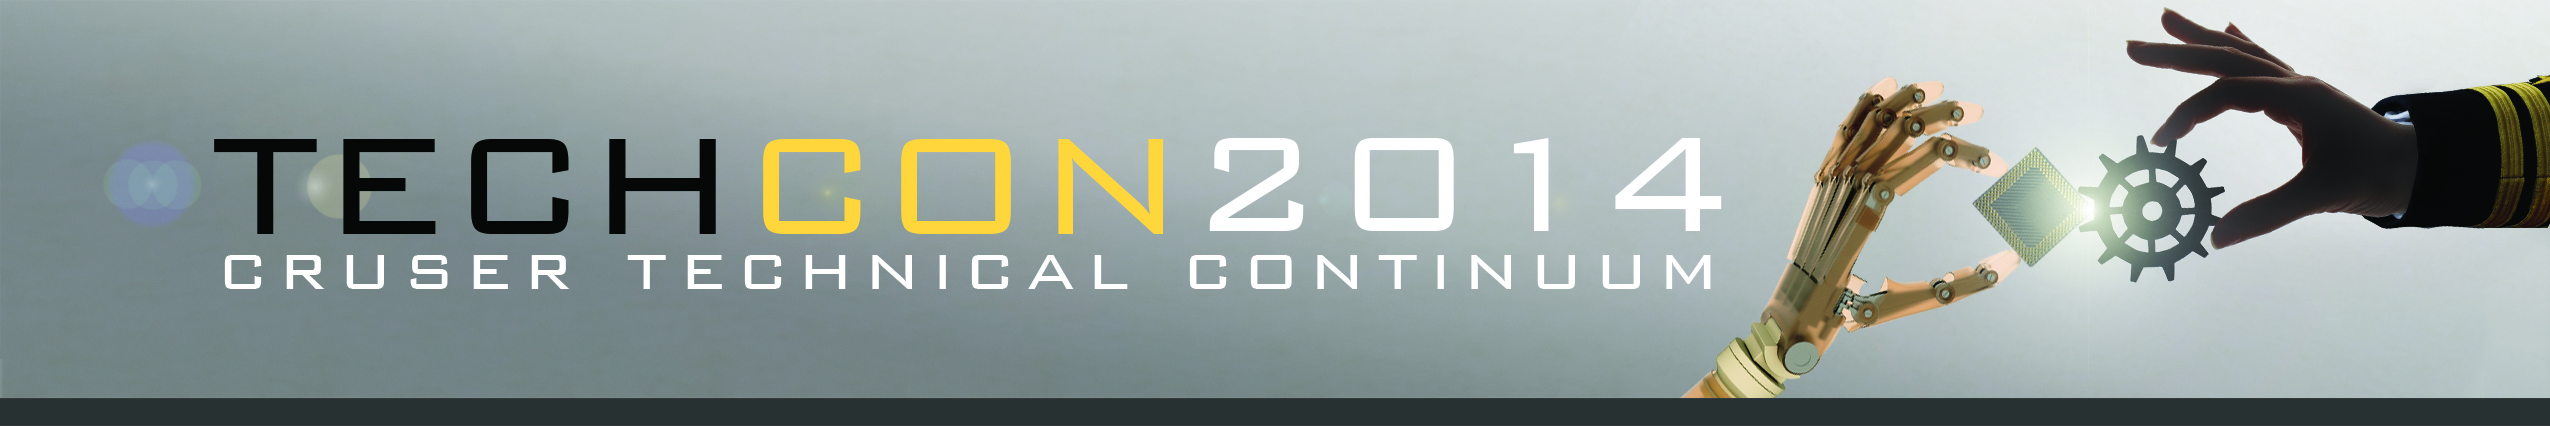 TechCon 2014 banner